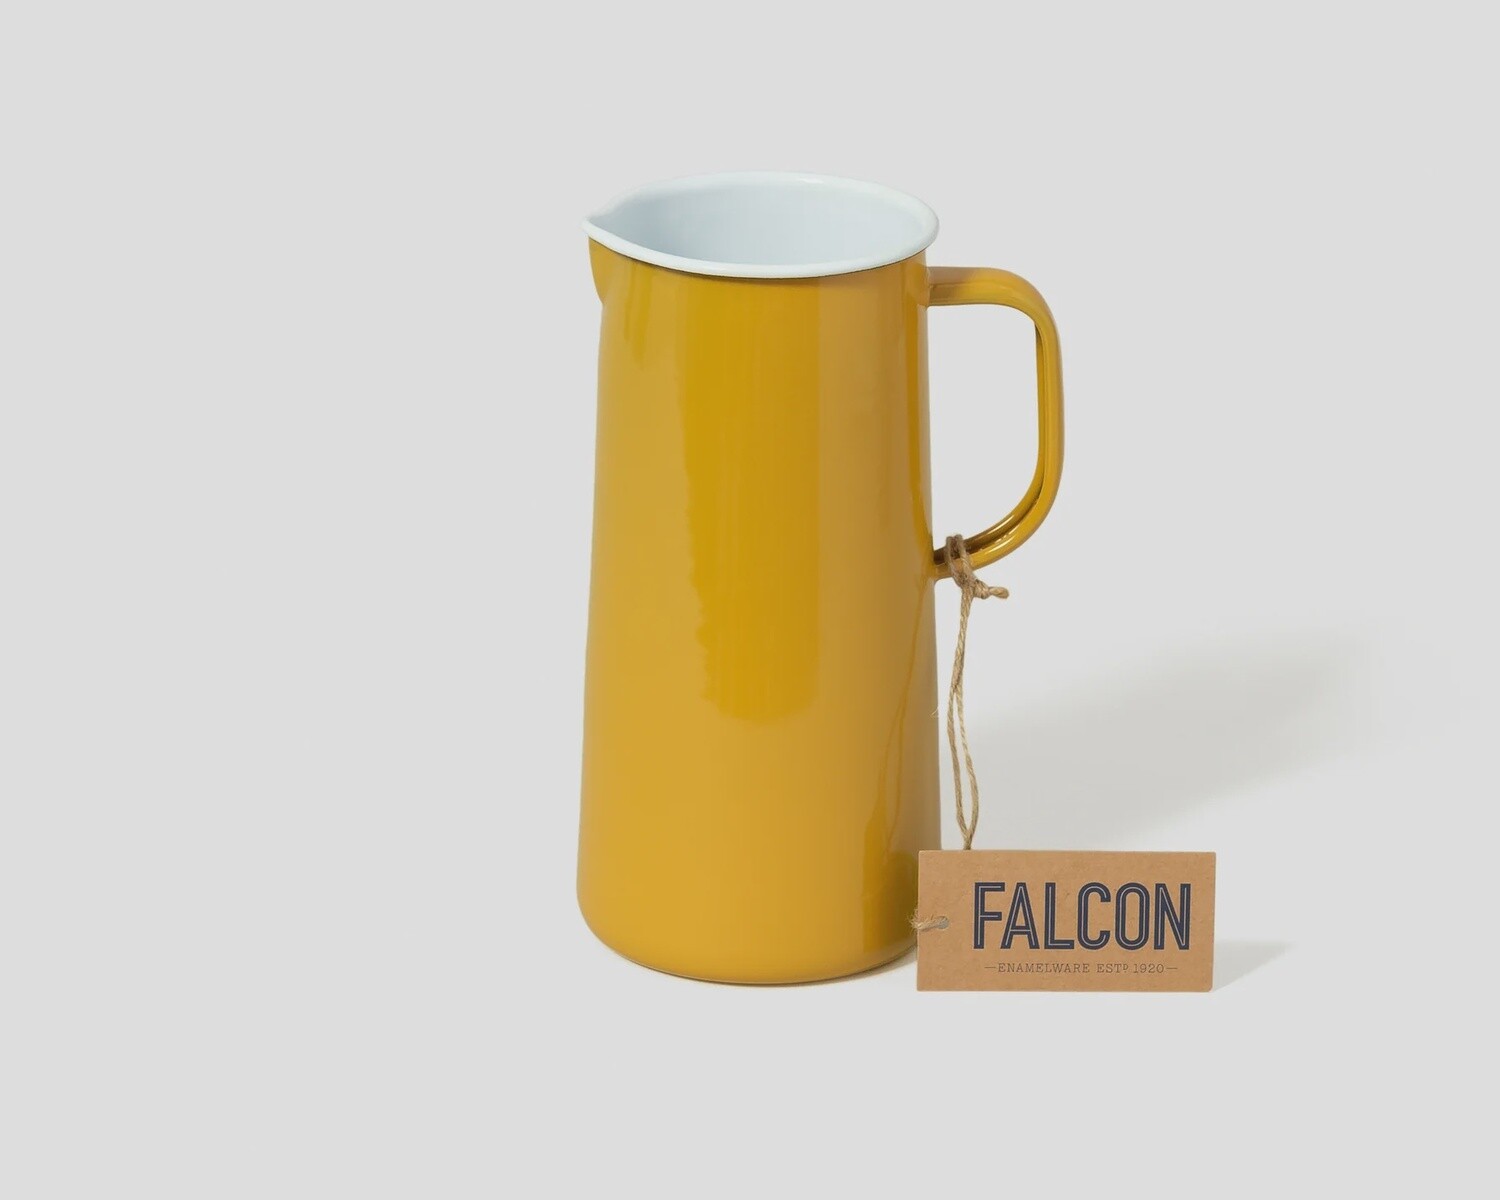 Falcon Jugs Limited Edition